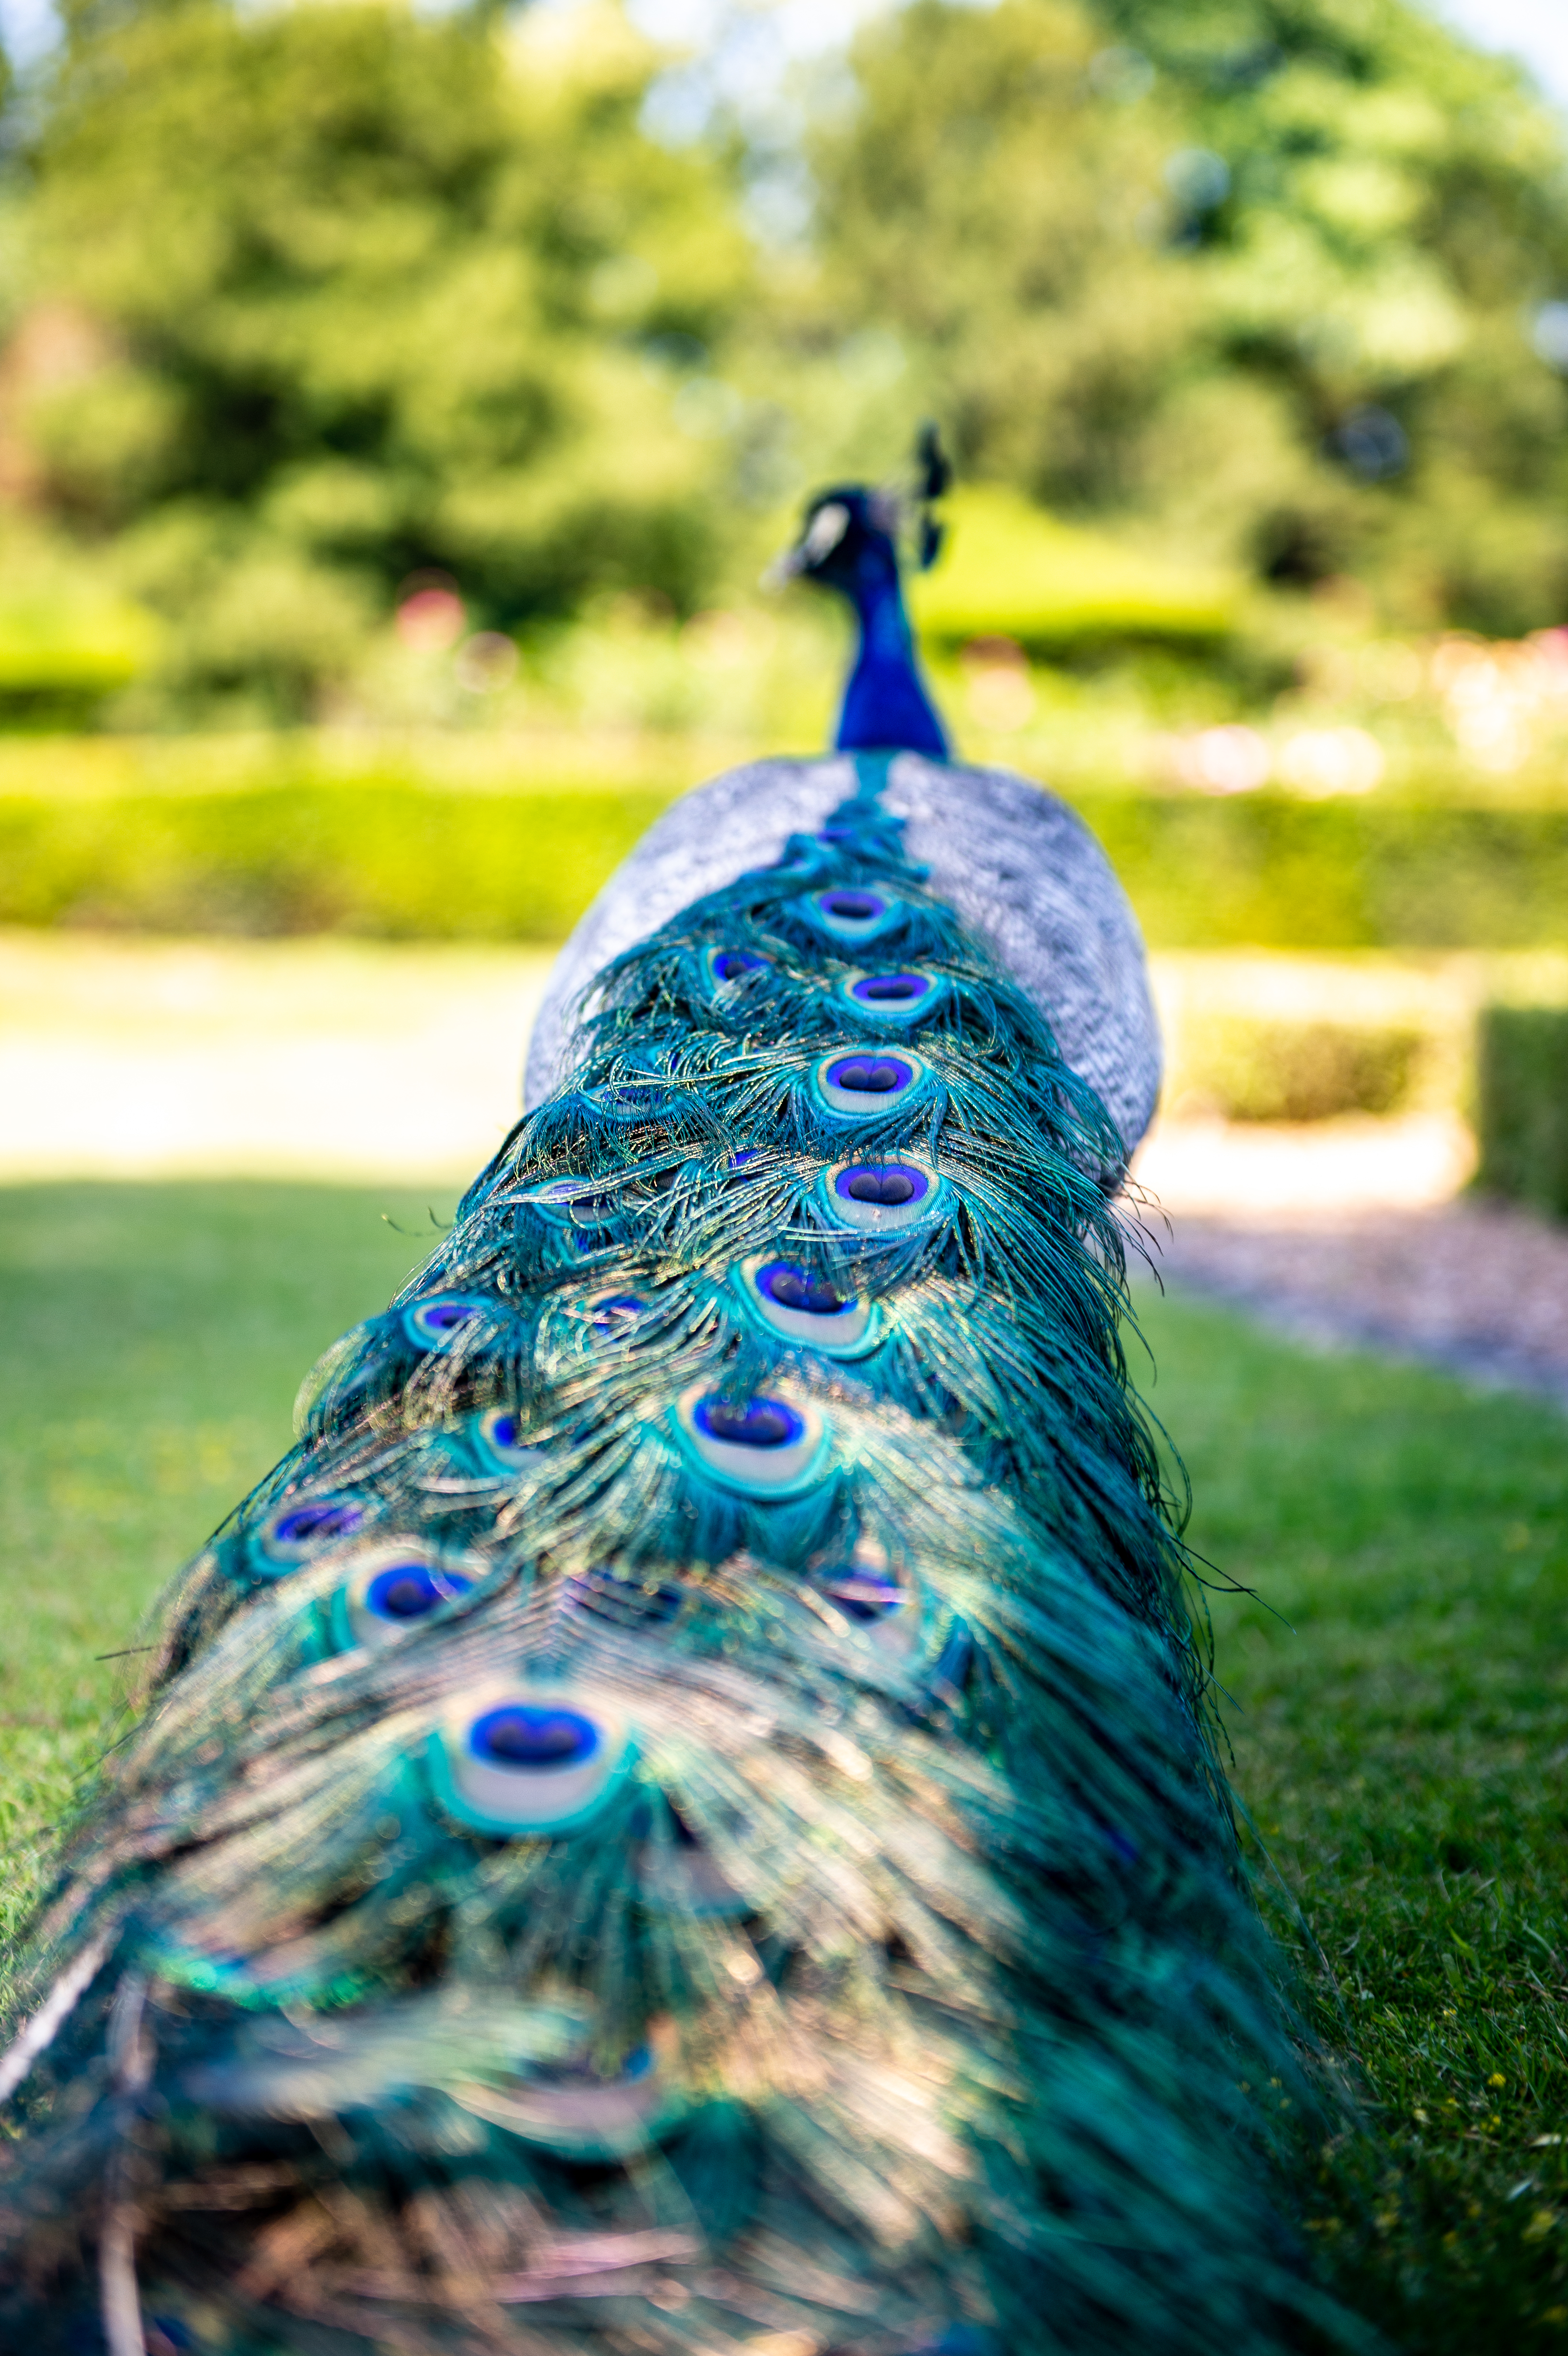 Peacock - close-up